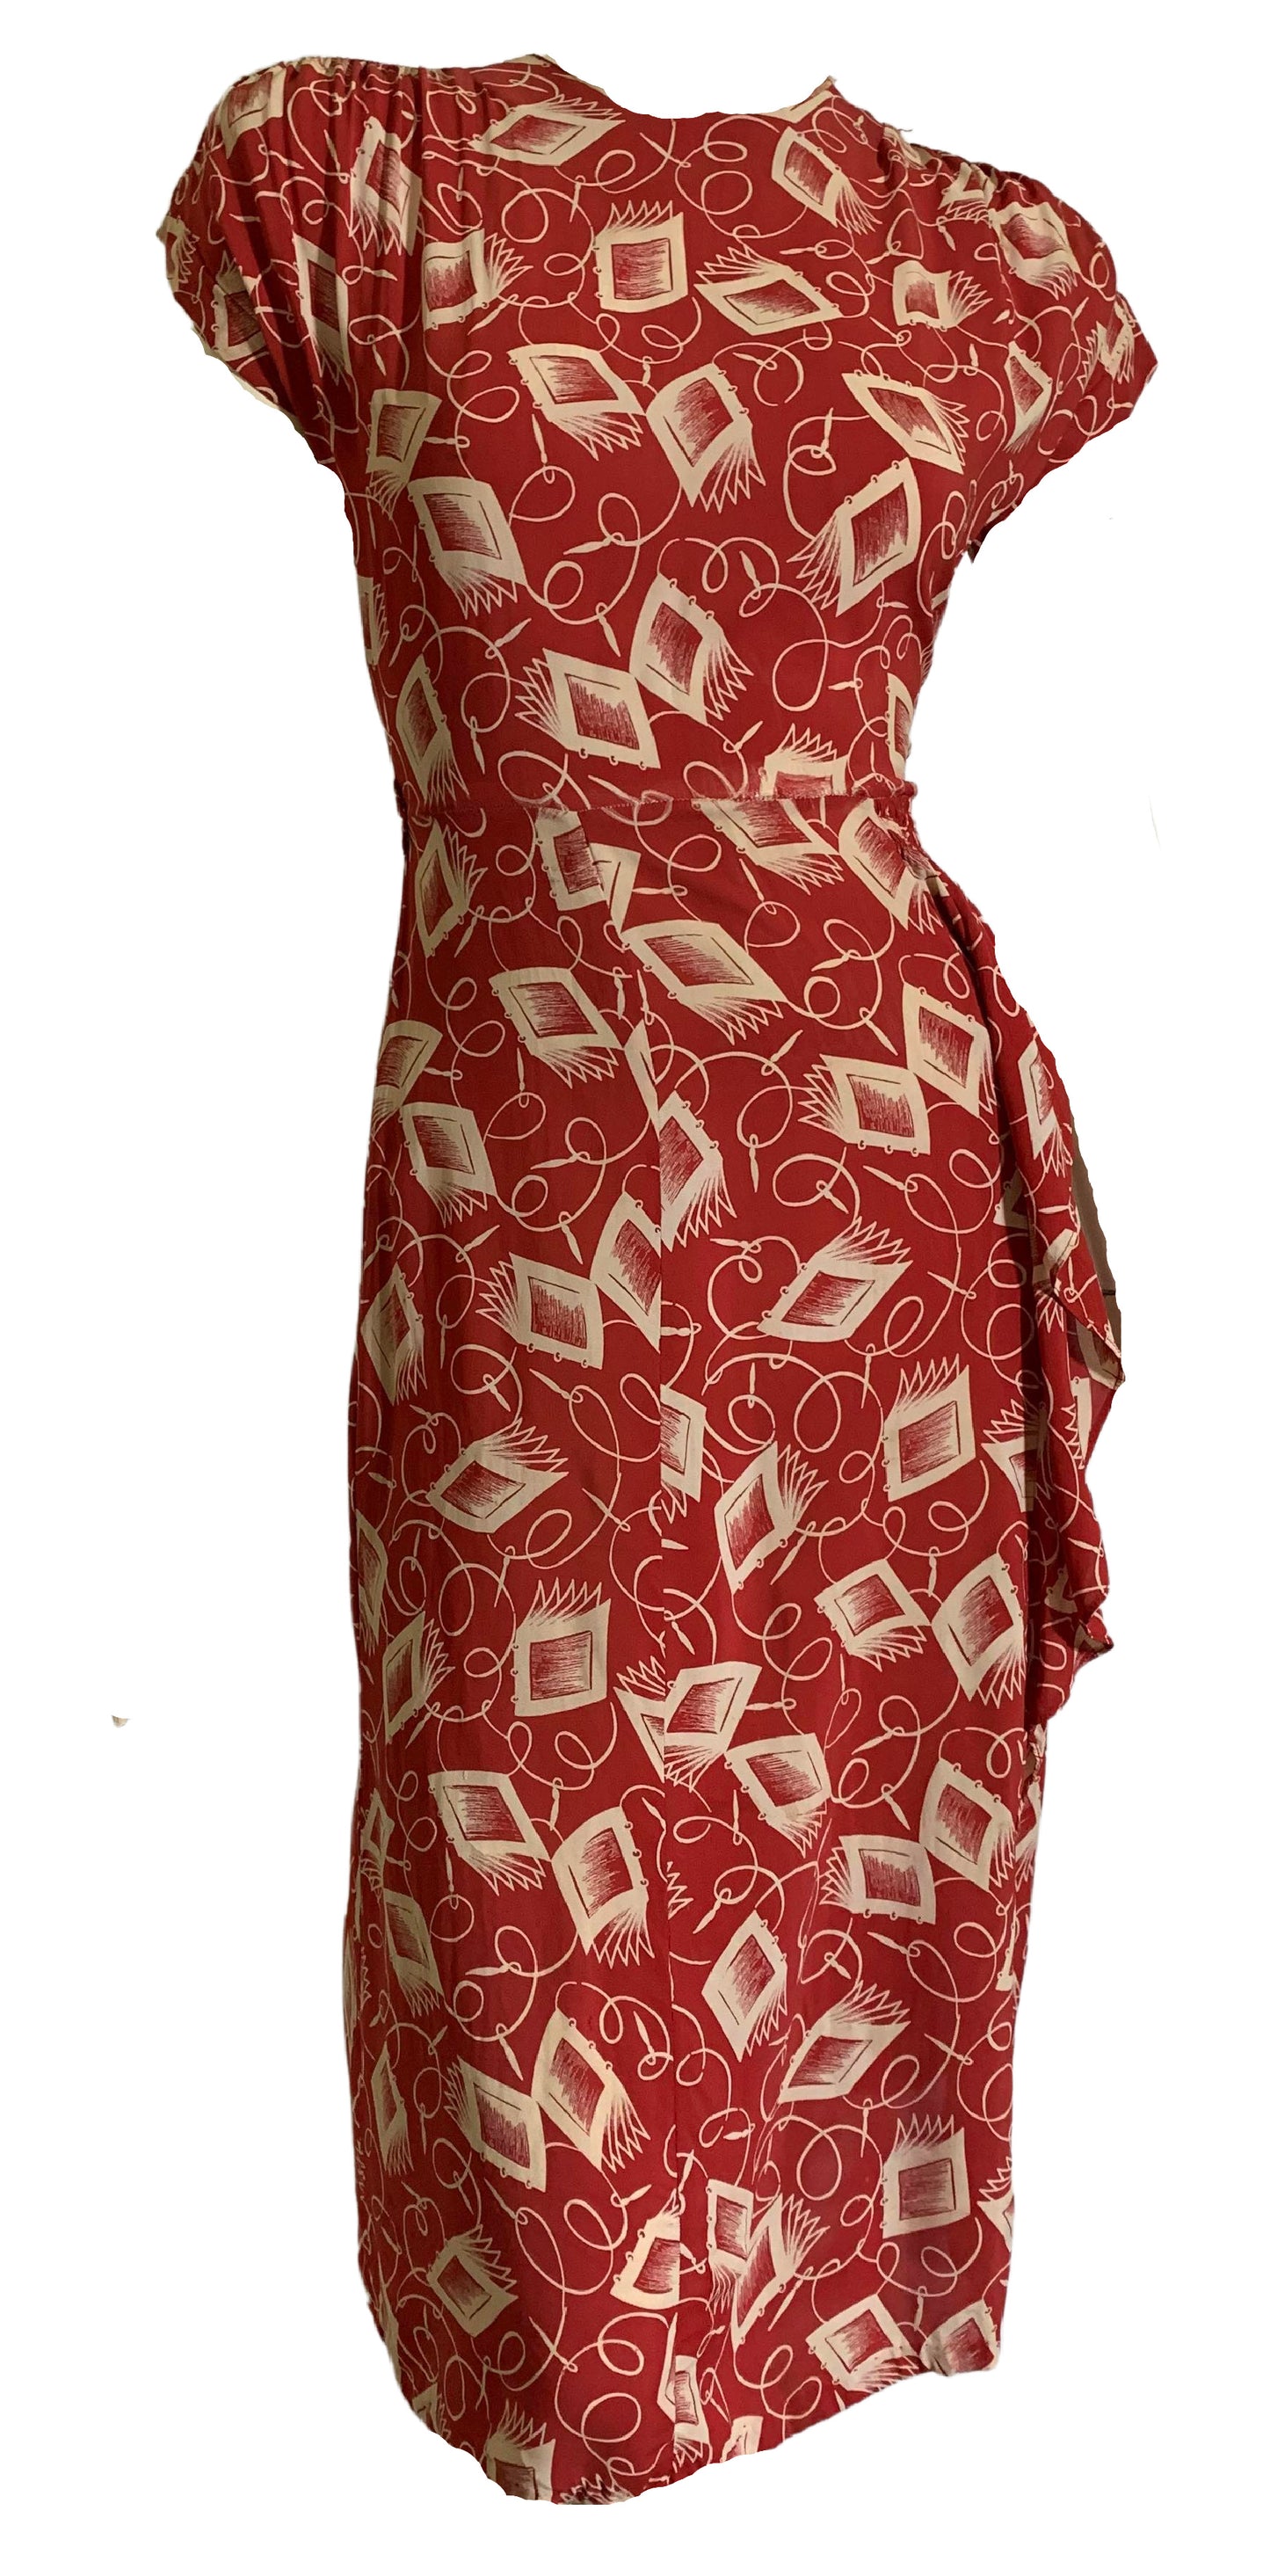 Notebook and Pen Brick Red Novelty Print Dress circa 1940s